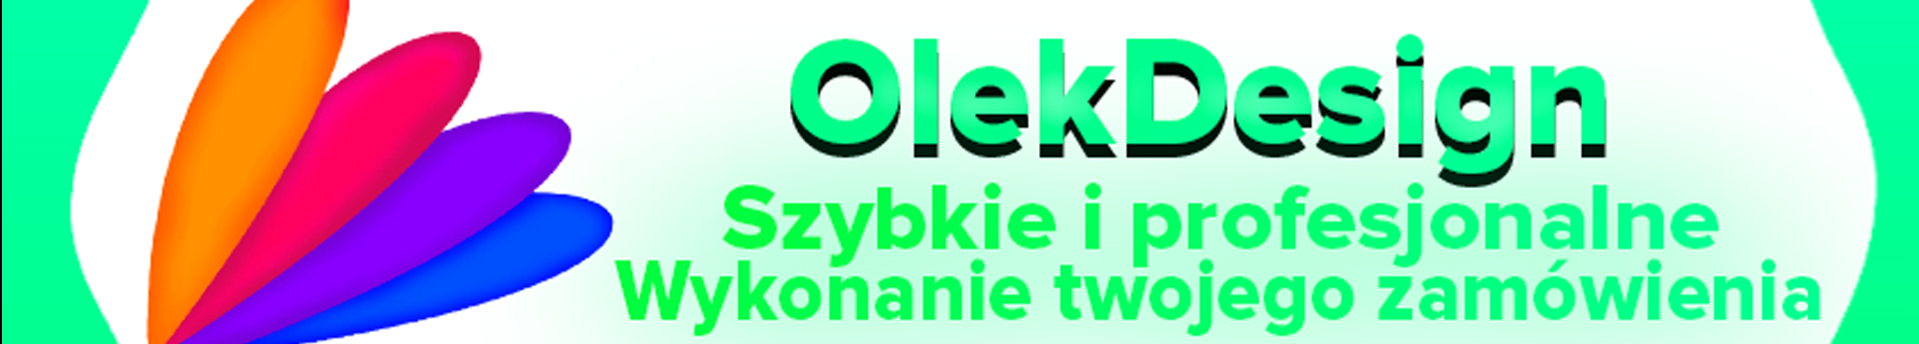 Olek Design のプロファイルバナー